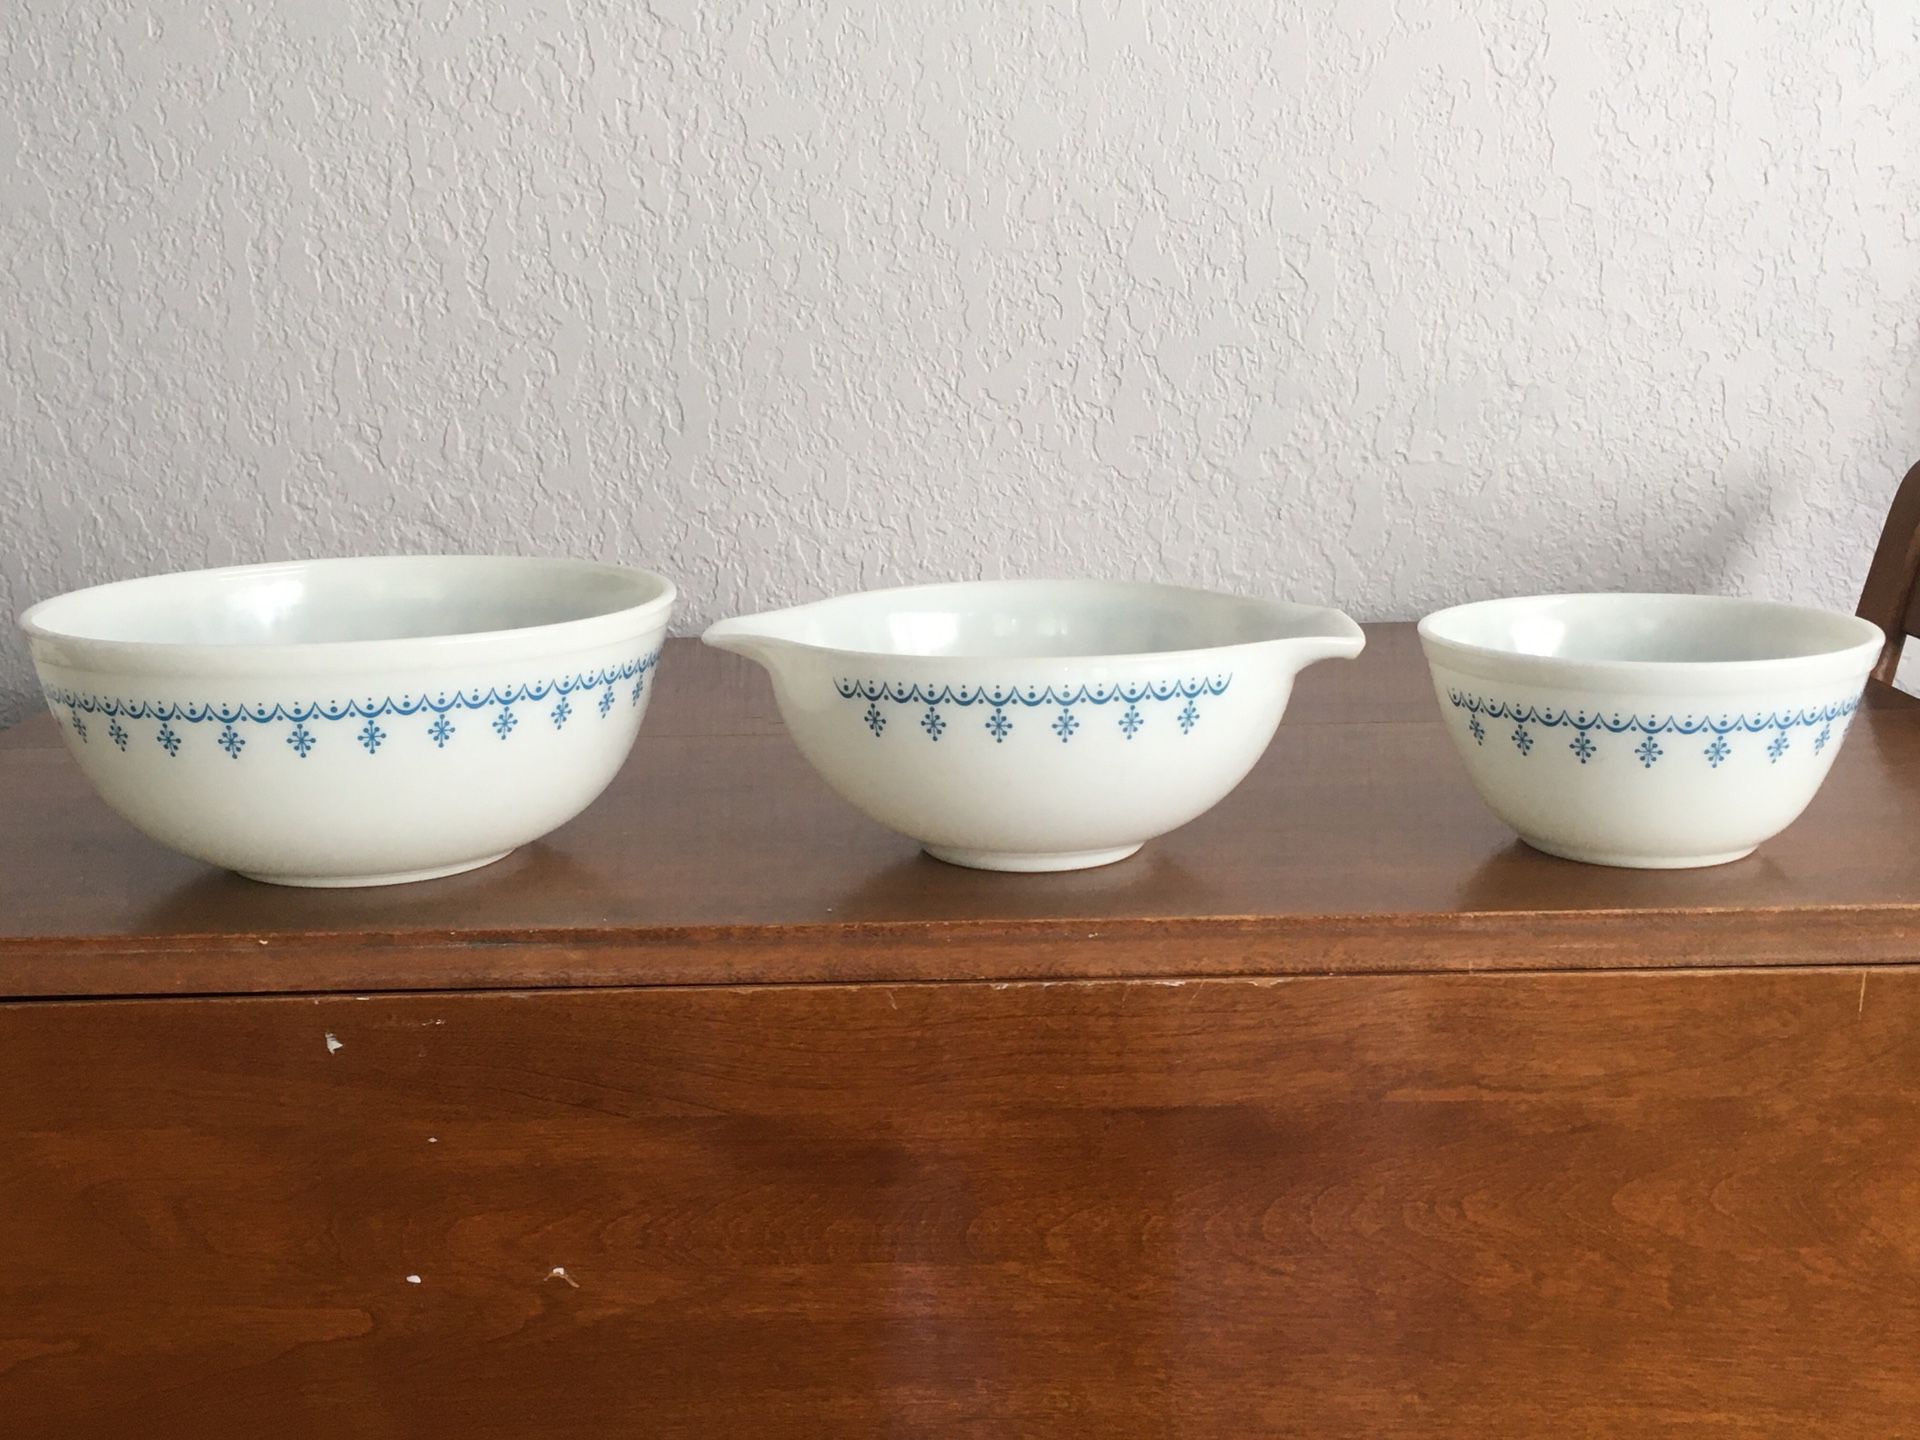 Pyrex bowls, snowflake garland design. Sizes are 4 quart, 2 1/2 quart and 1 1/2 quart